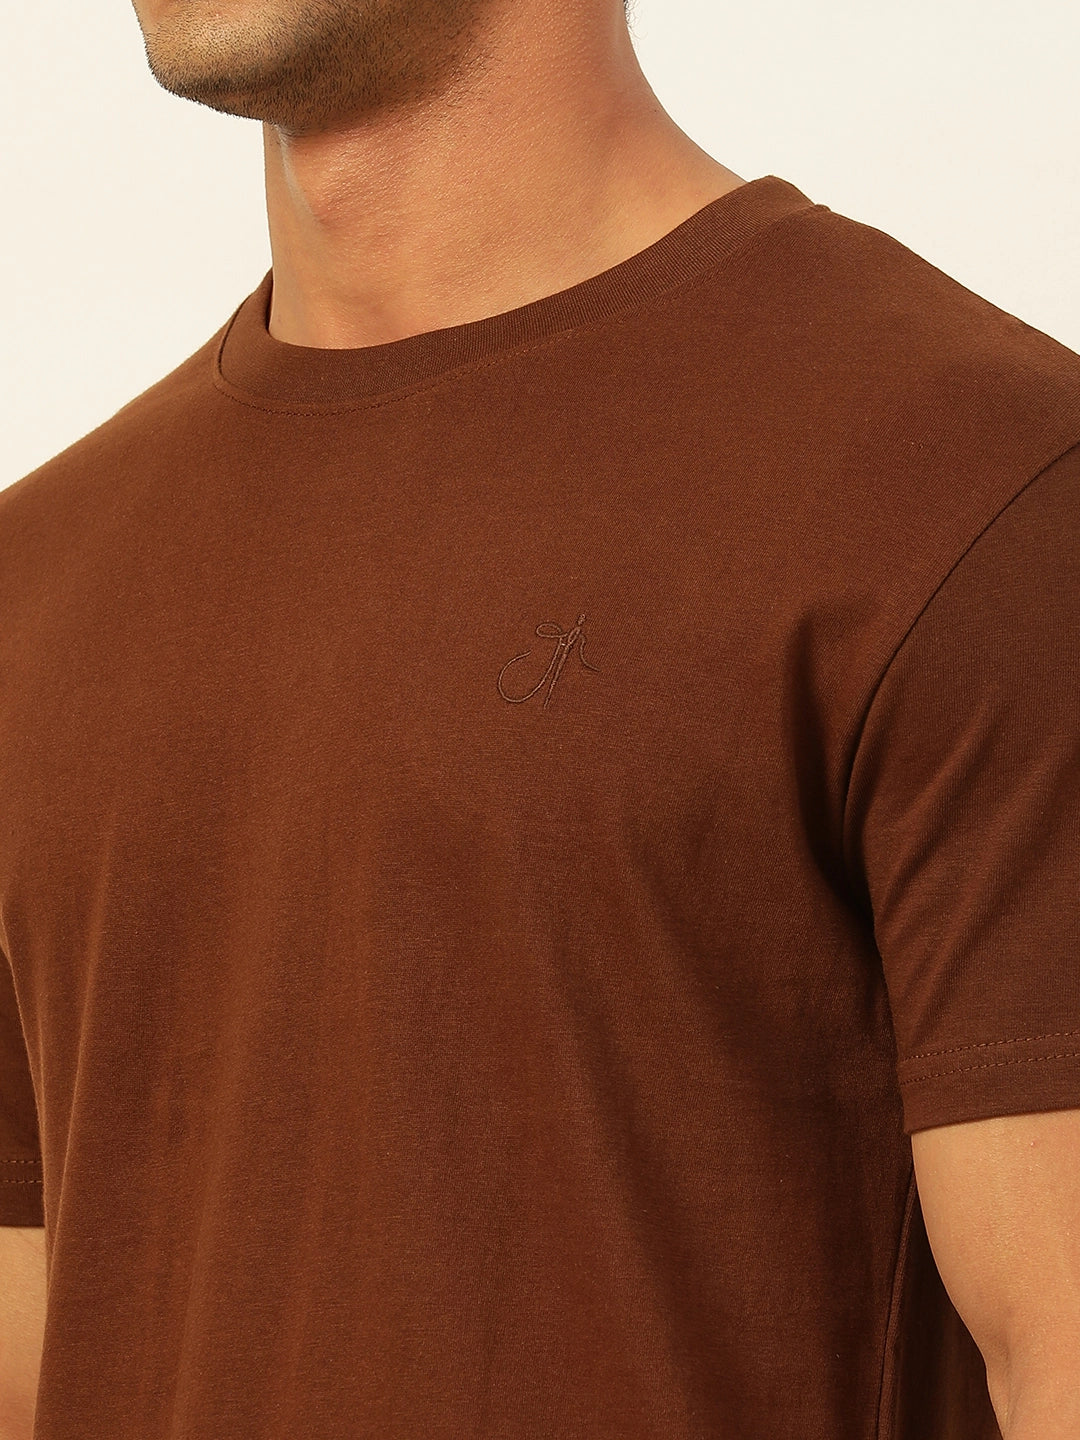 Premium Coffee Brown Solid Round Neck Unisex Comfort Fit T-Shirt